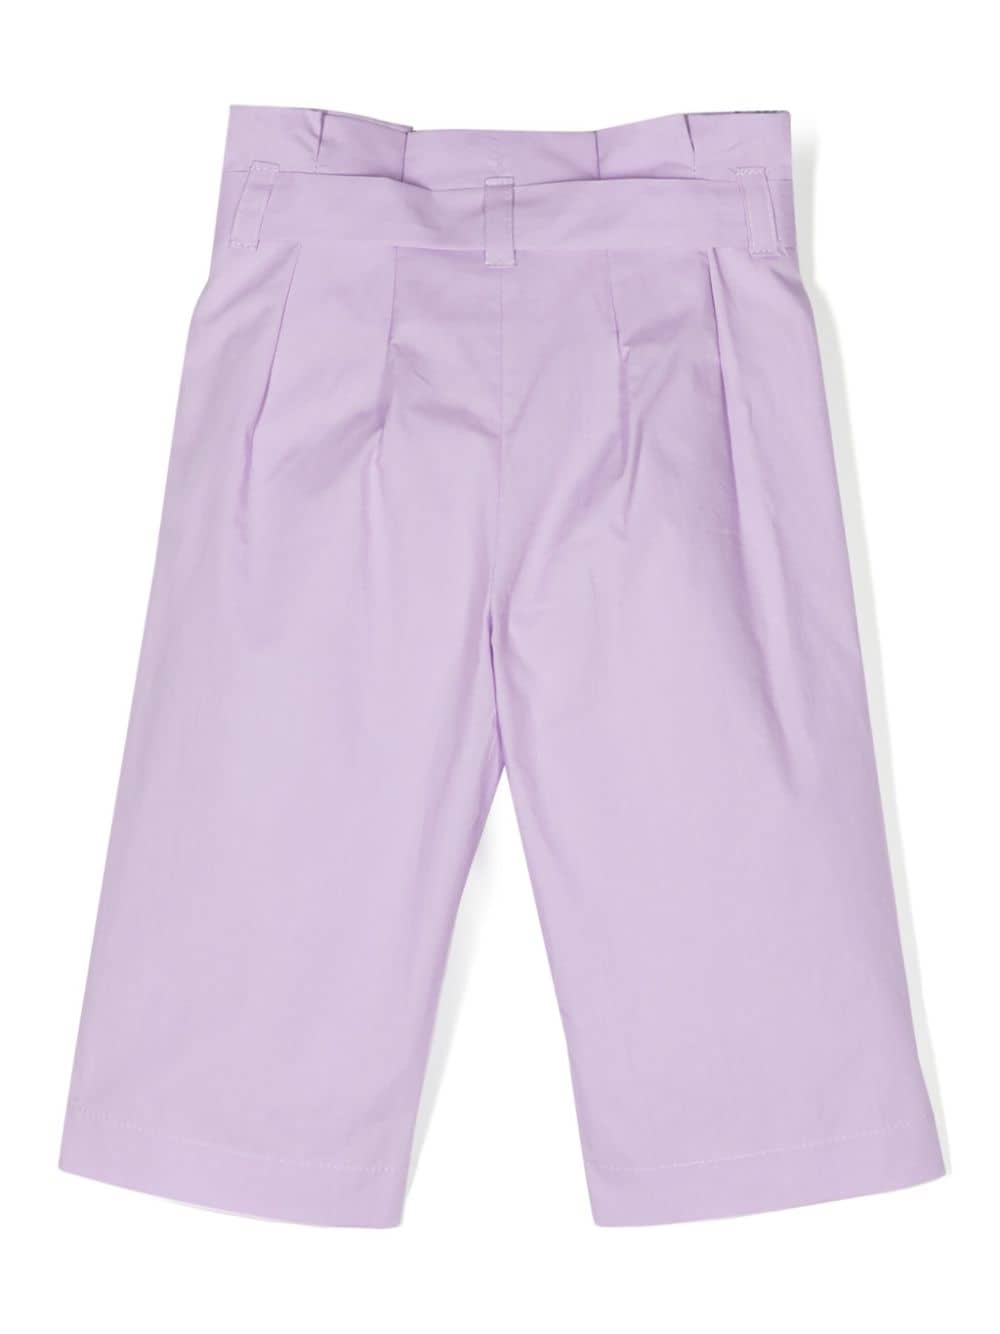 Pantaloni bambina viola chiaro